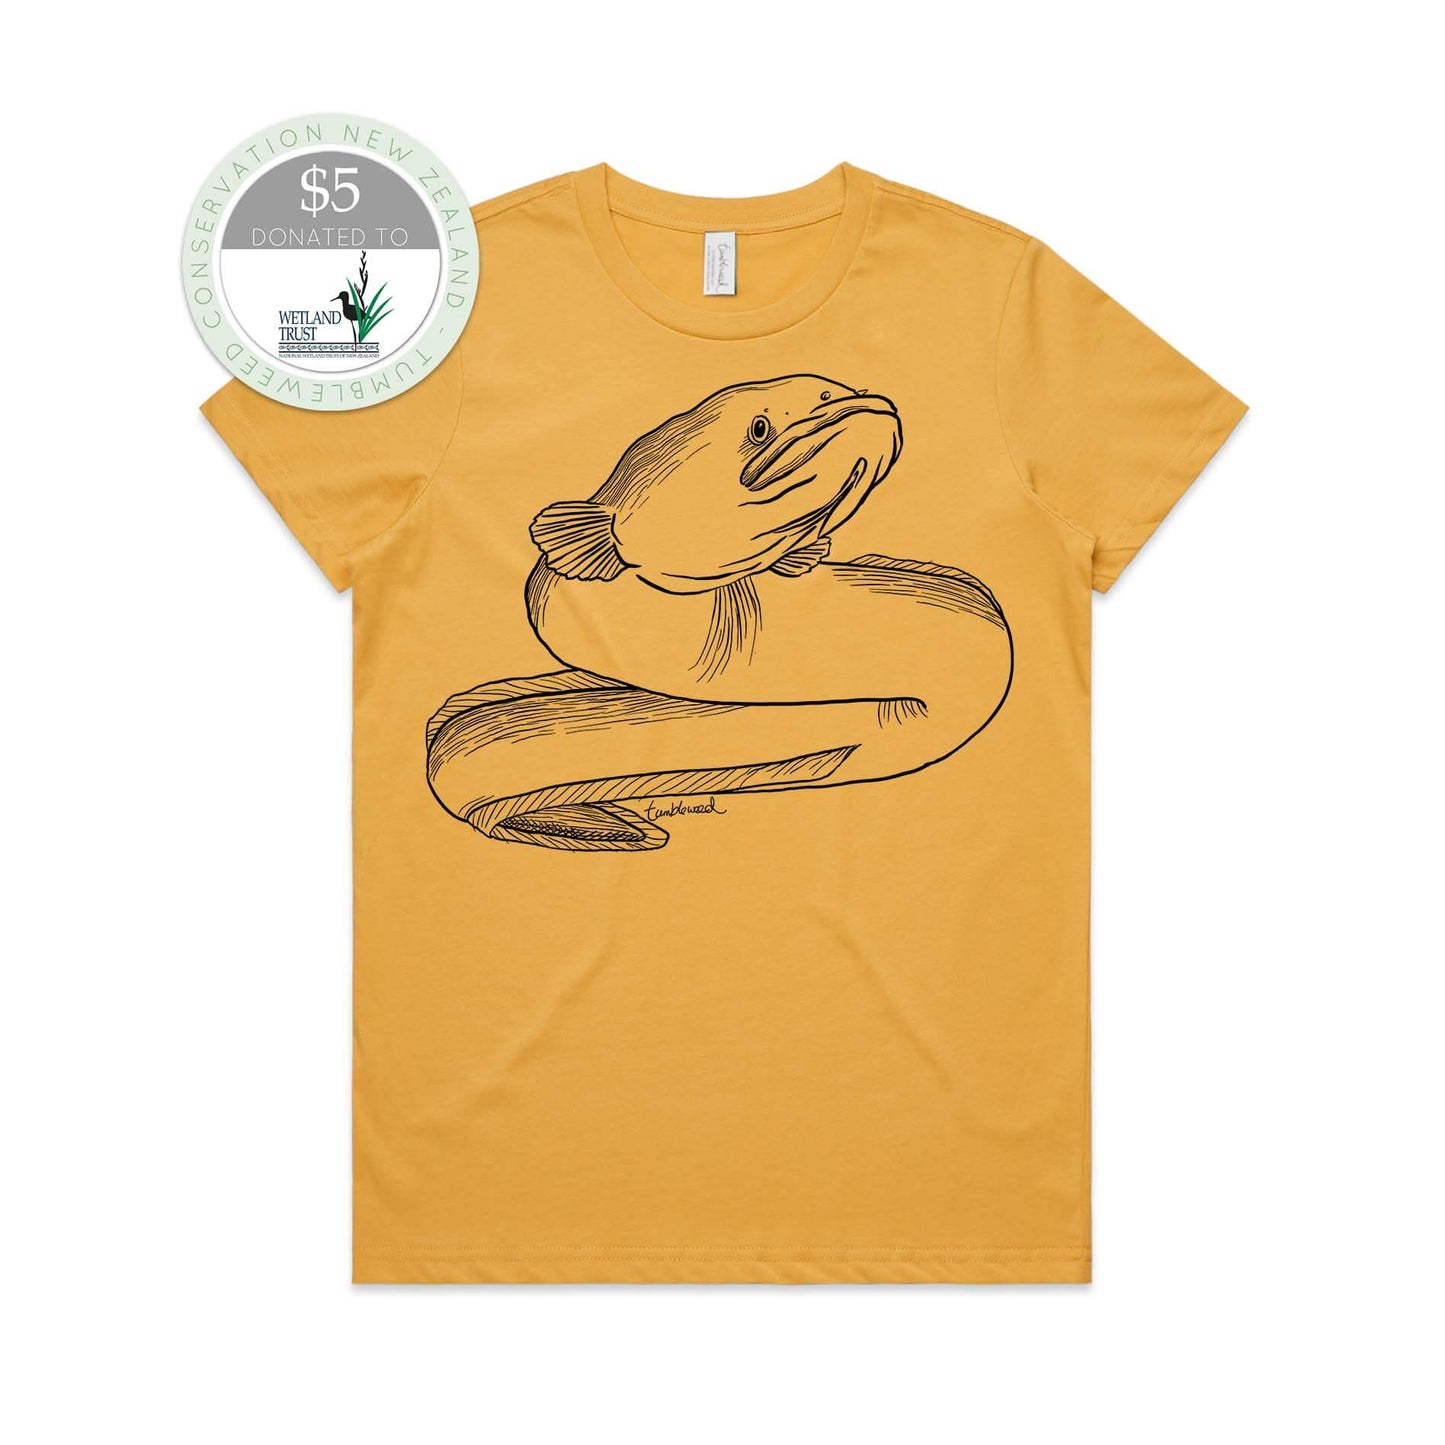 Mustard, female t-shirt featuring a screen printed Longfin Eel/Tuna design.